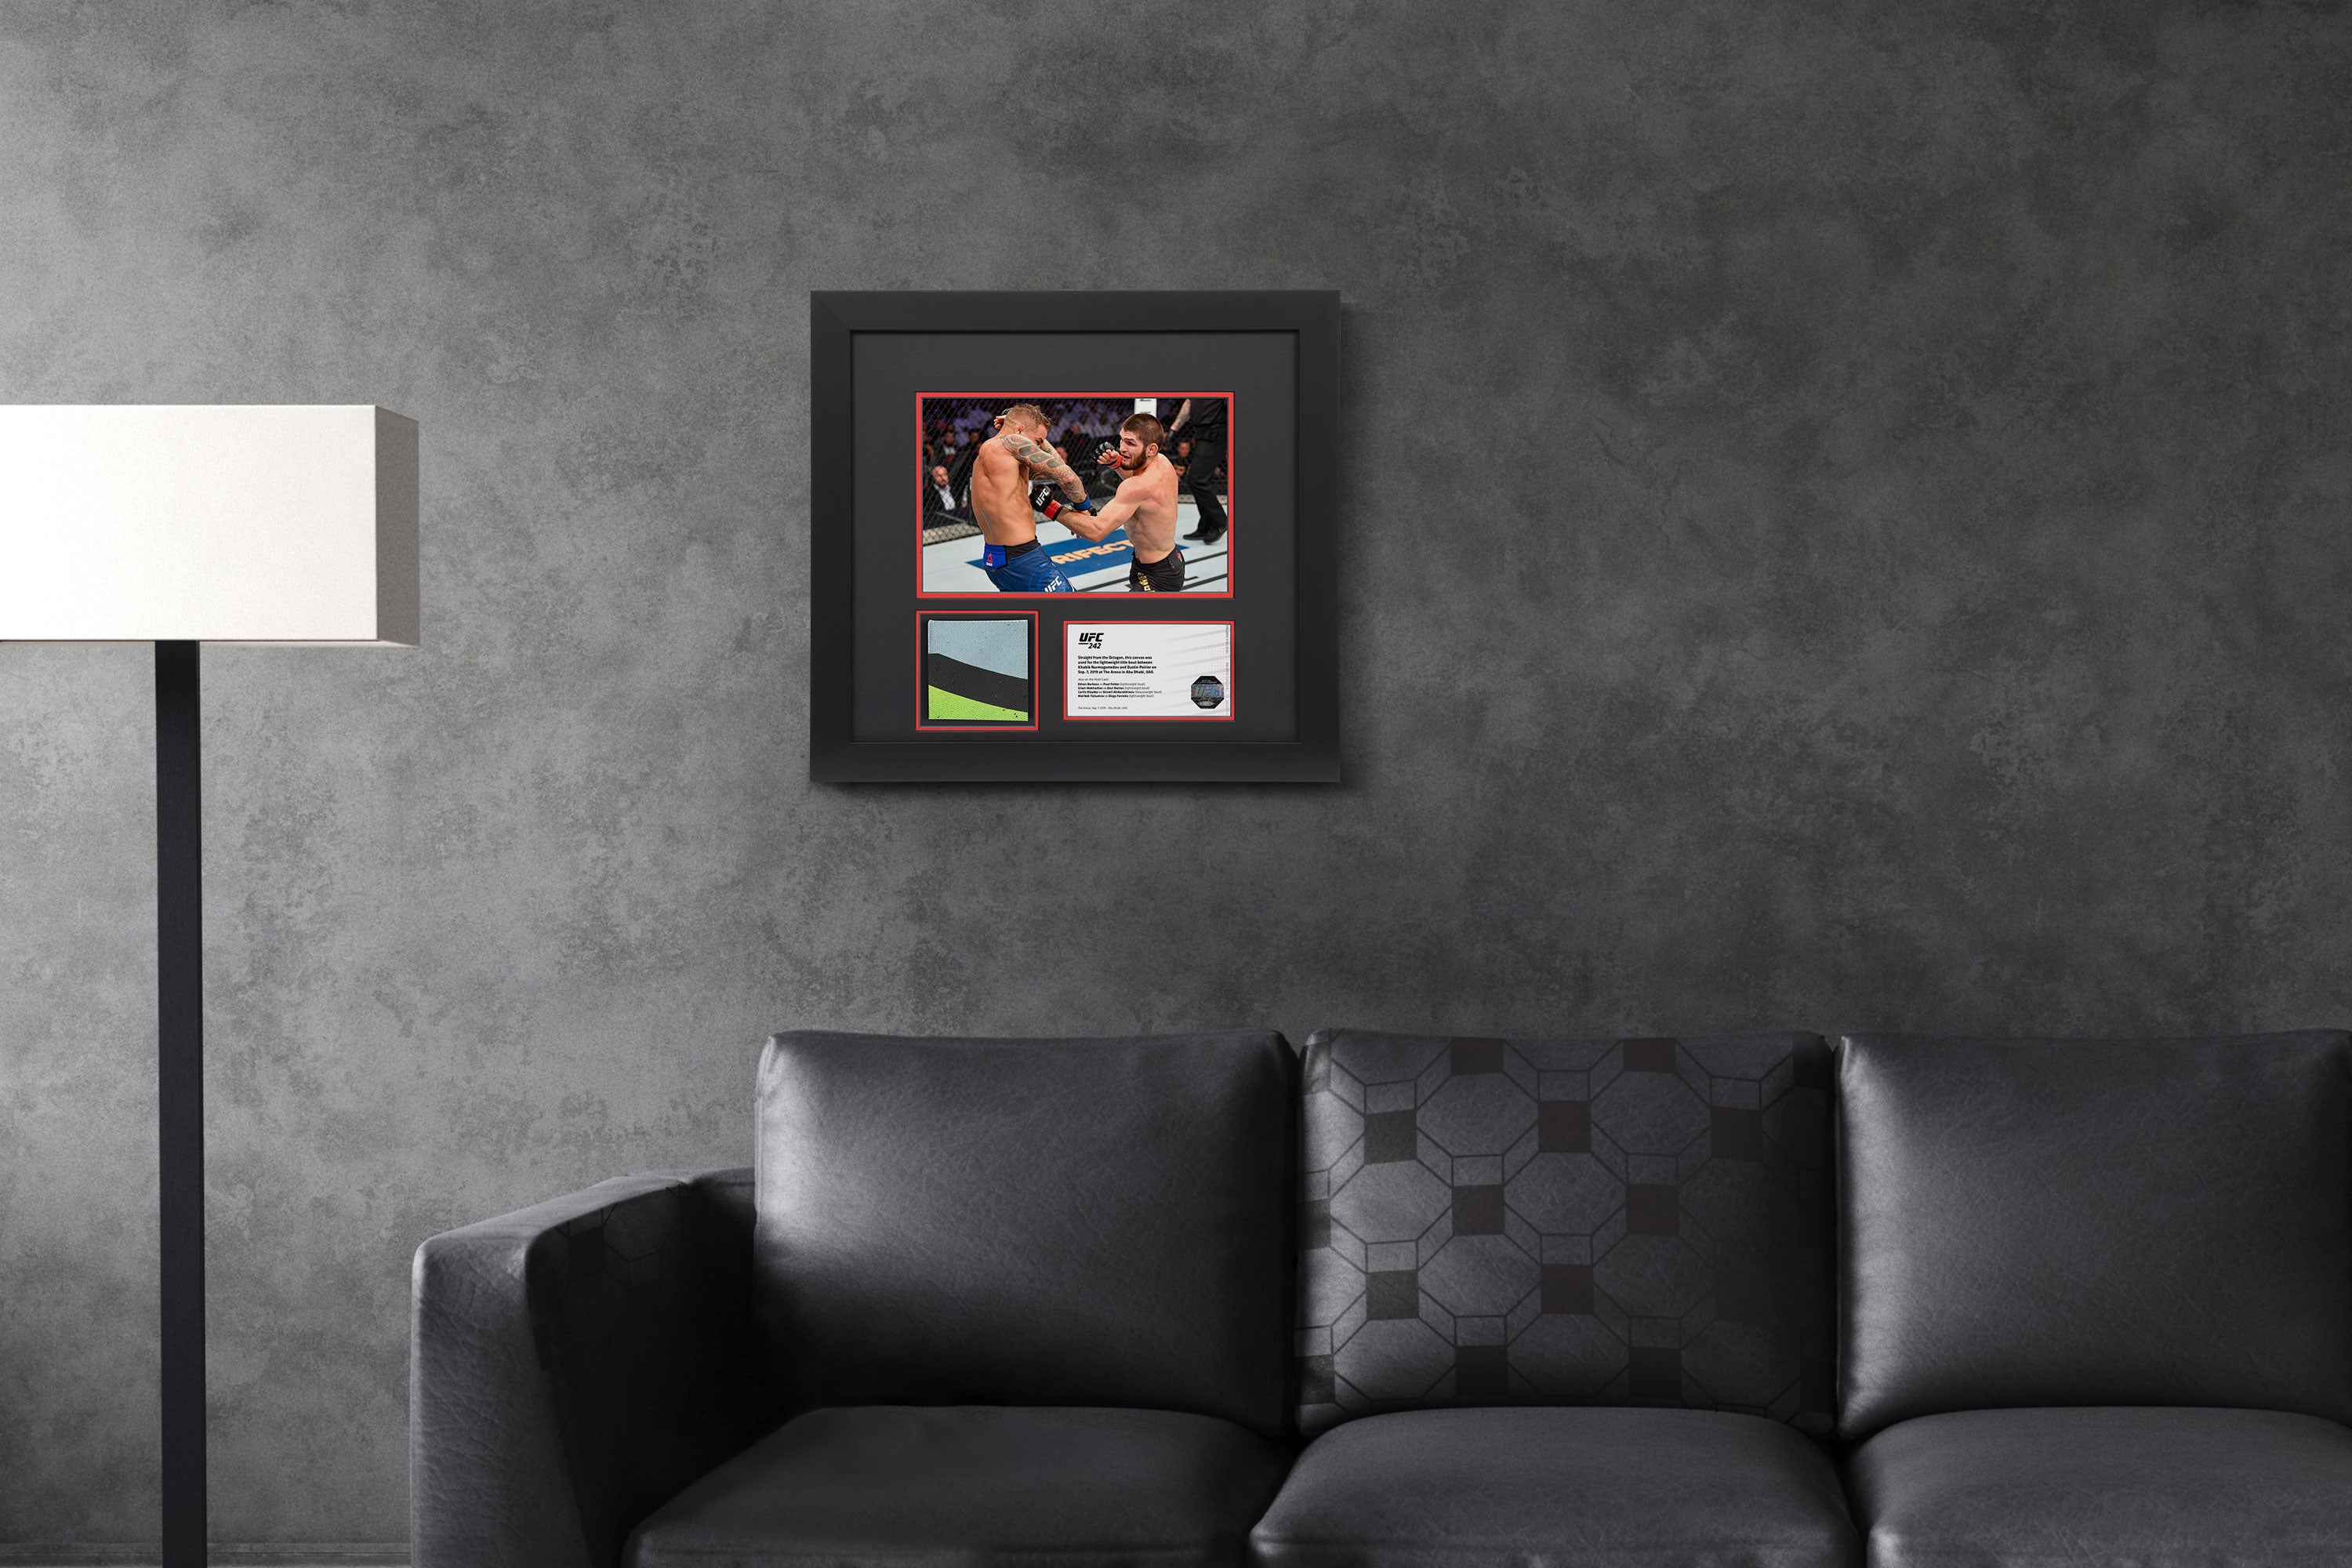 UFC 242: Khabib vs Poirier Canvas & Photo